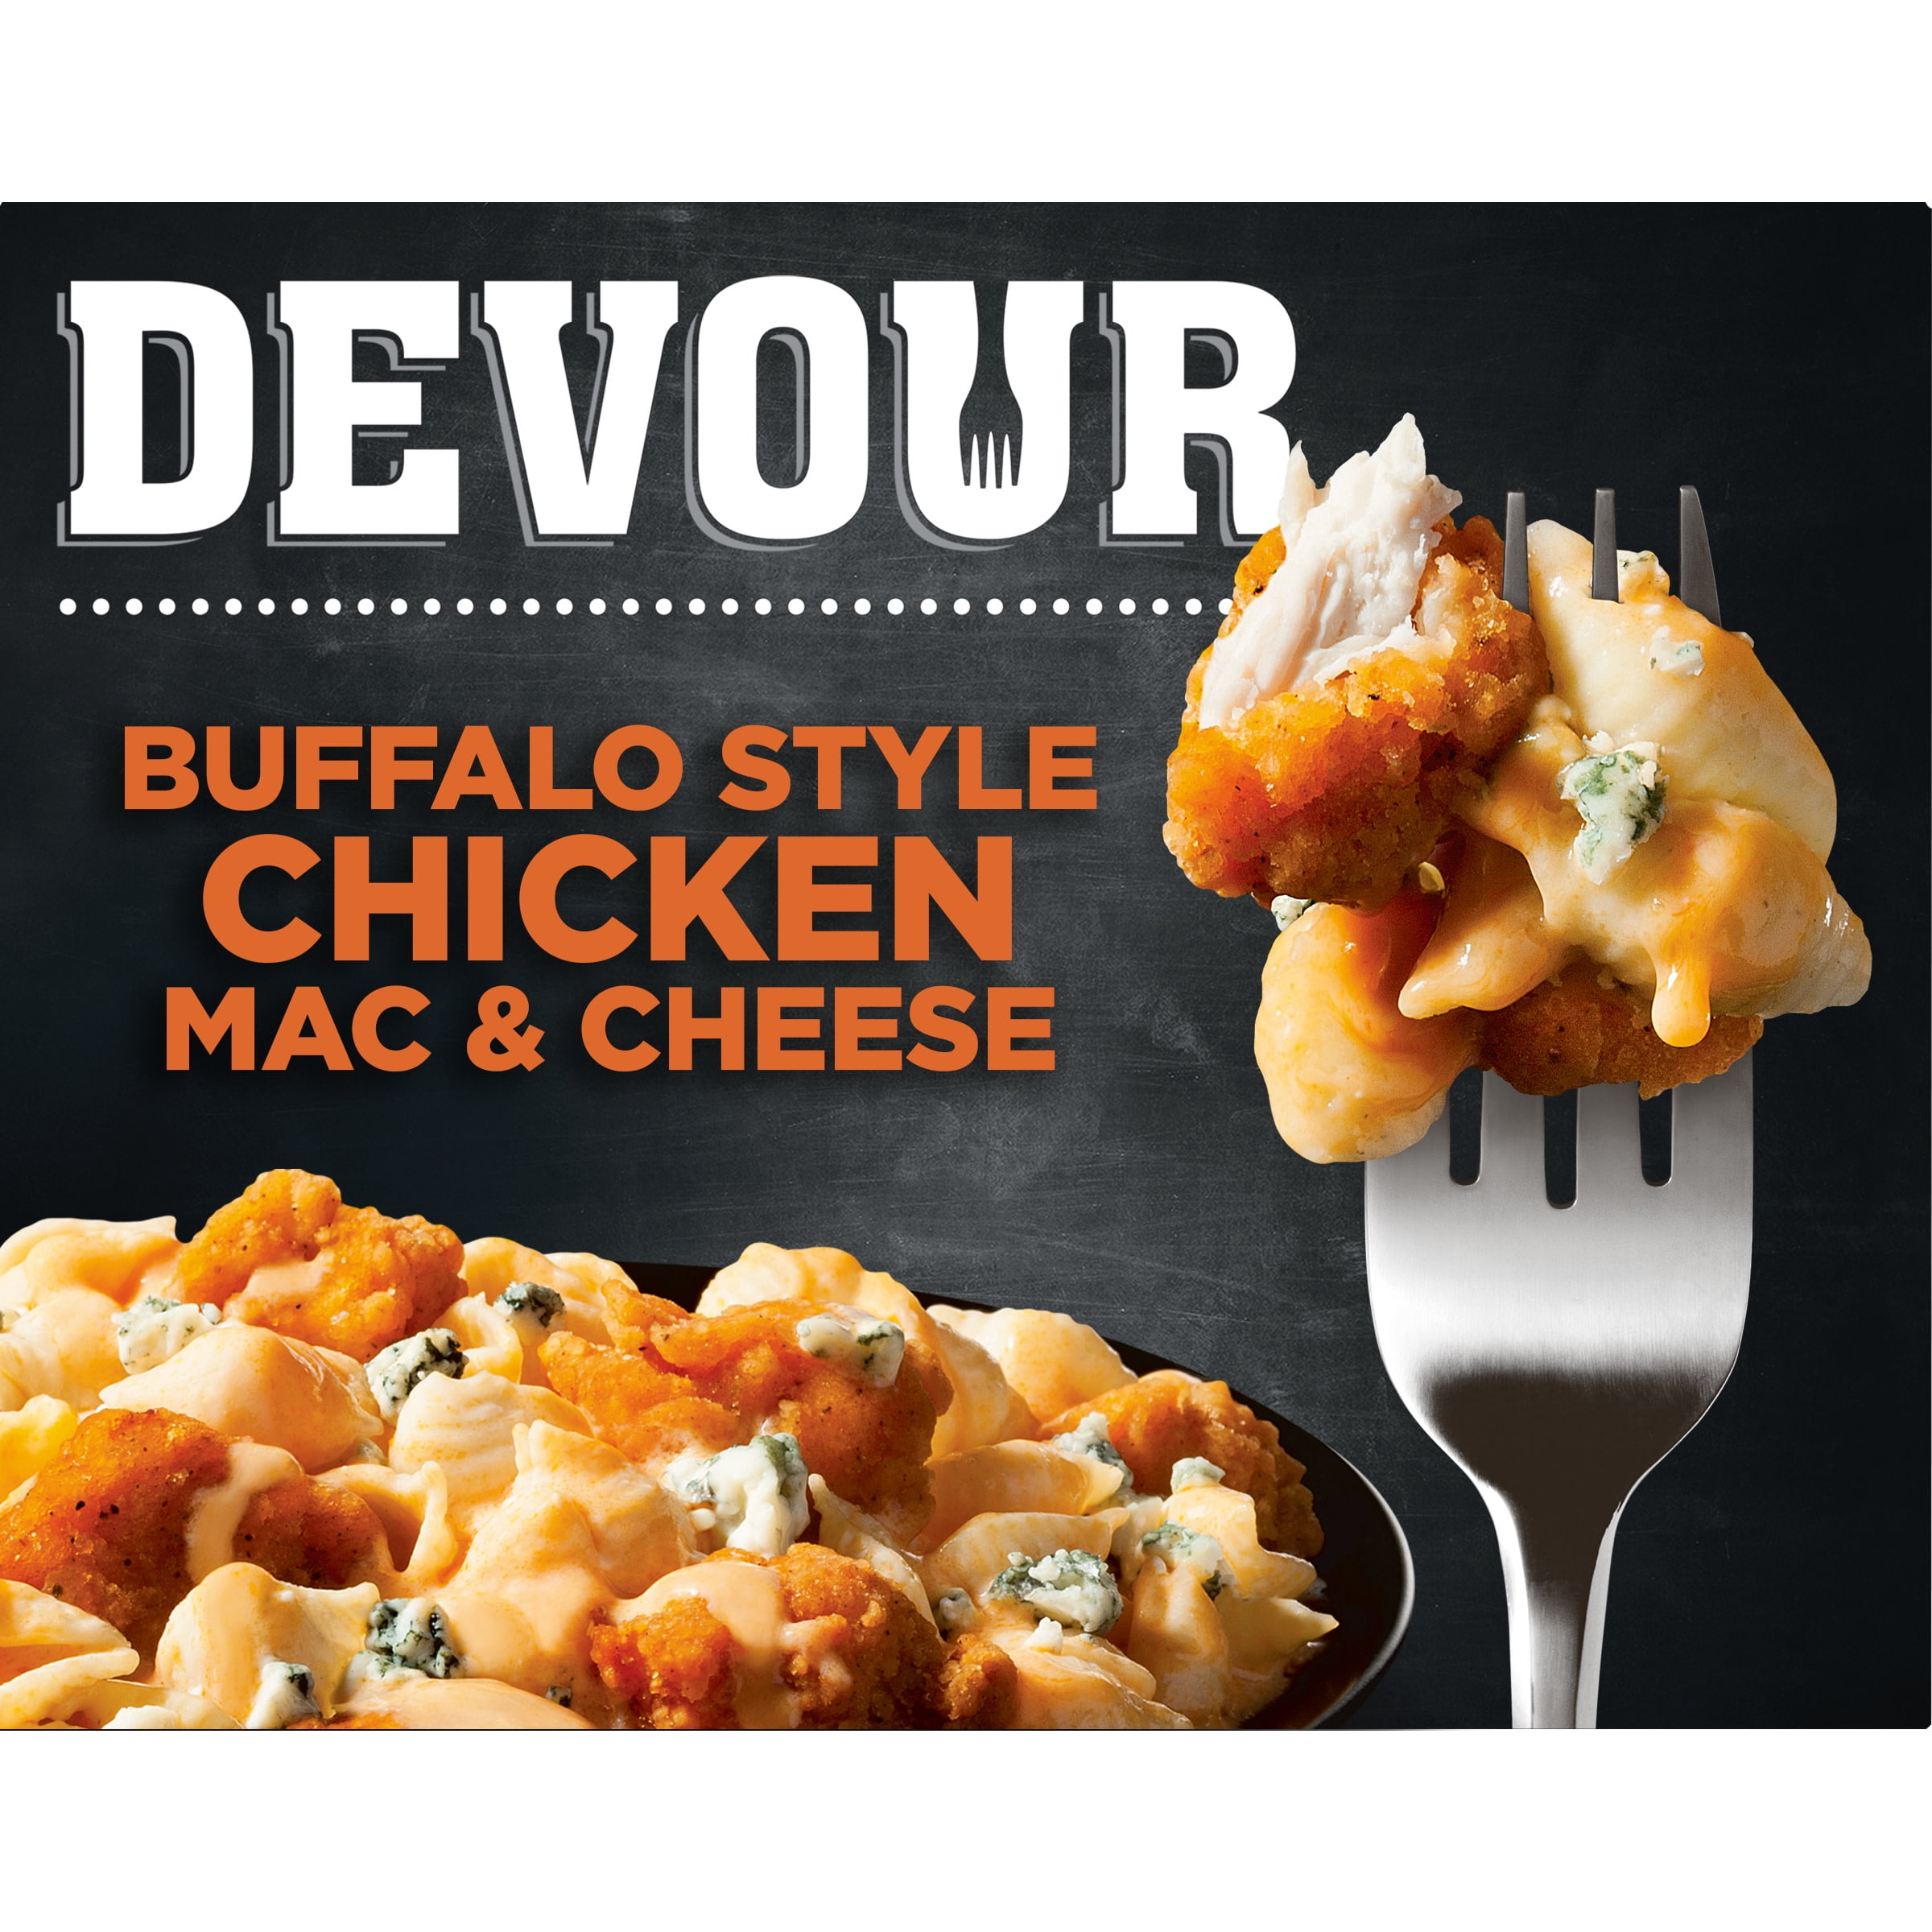 Devour Buffalo Chicken Mac And Cheese Frozen Meal 12 Oz Box Walmart Business 